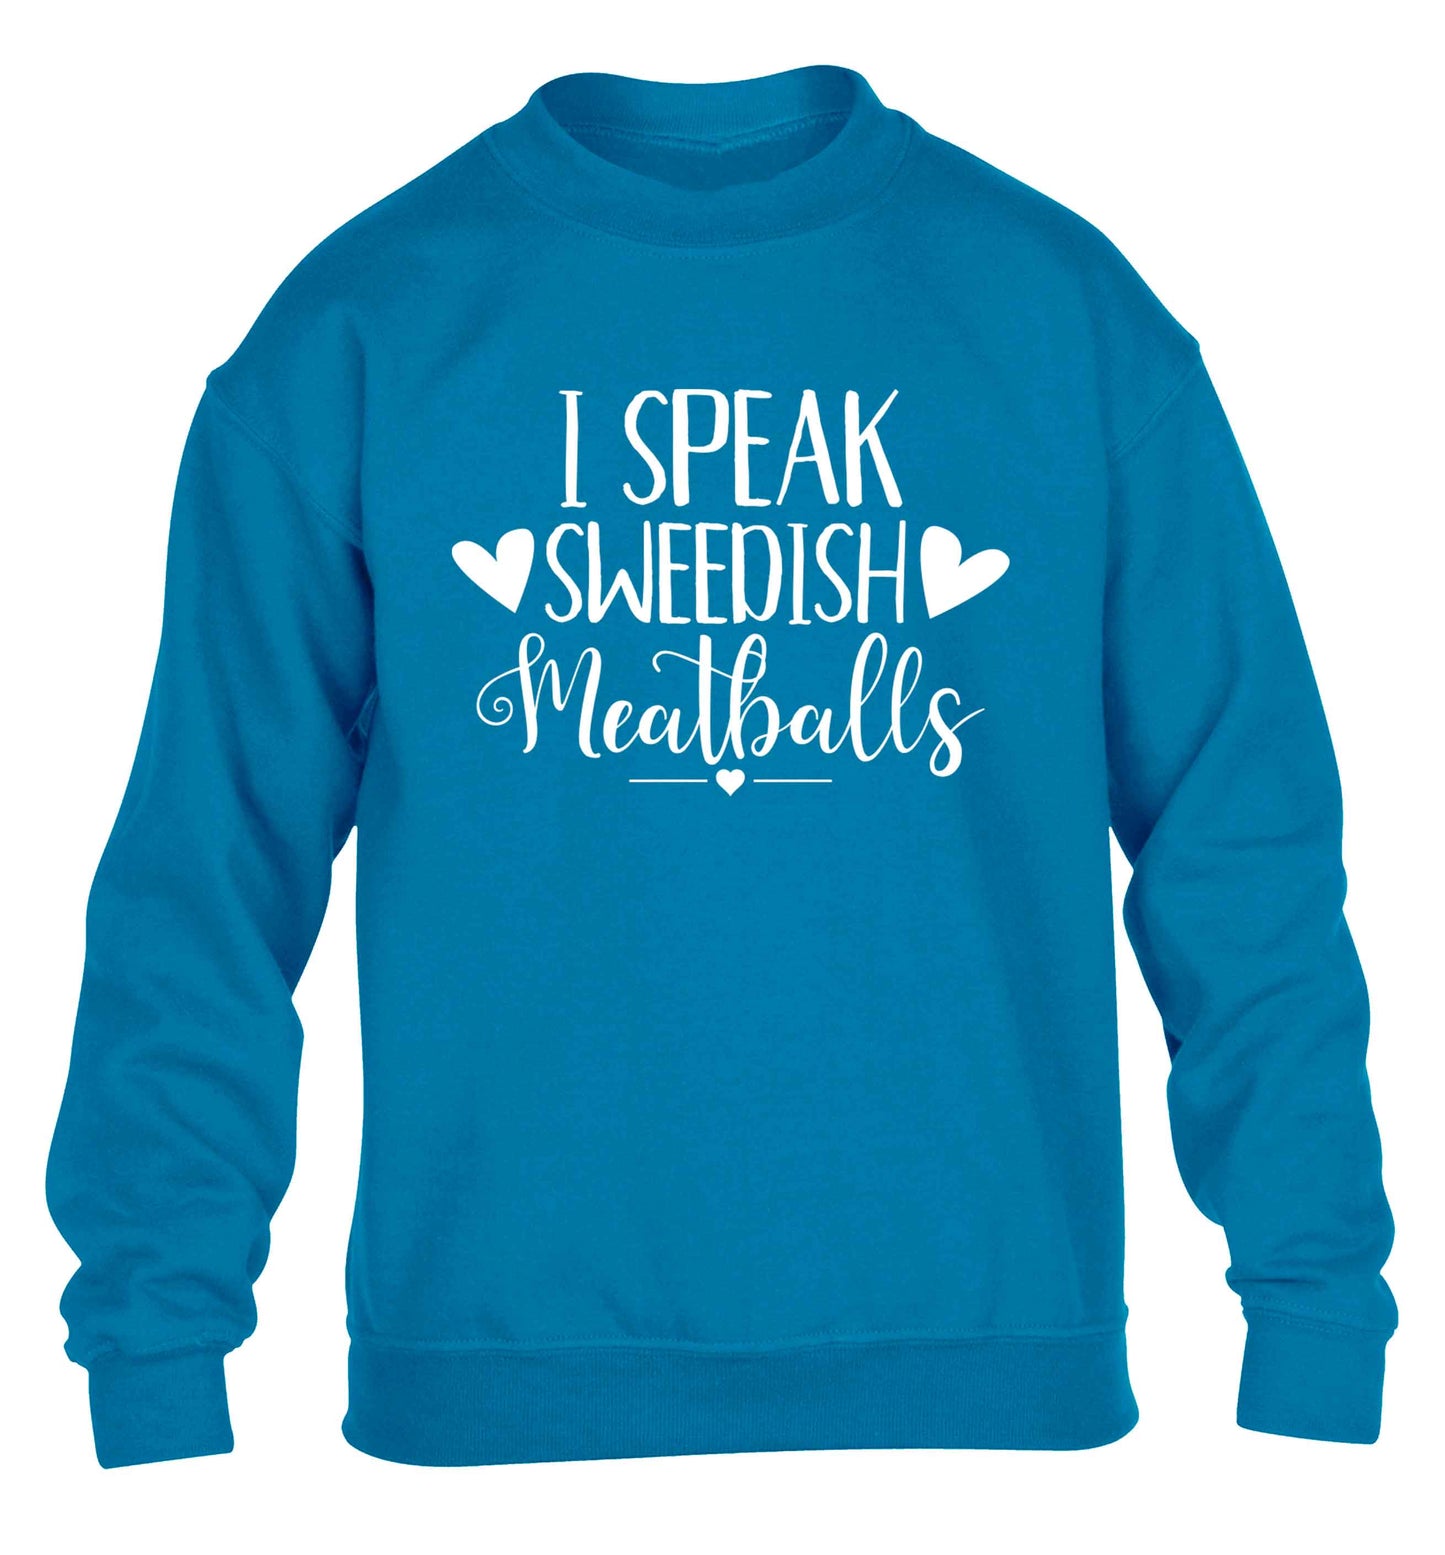 I speak sweedish...meatballs children's blue sweater 12-13 Years